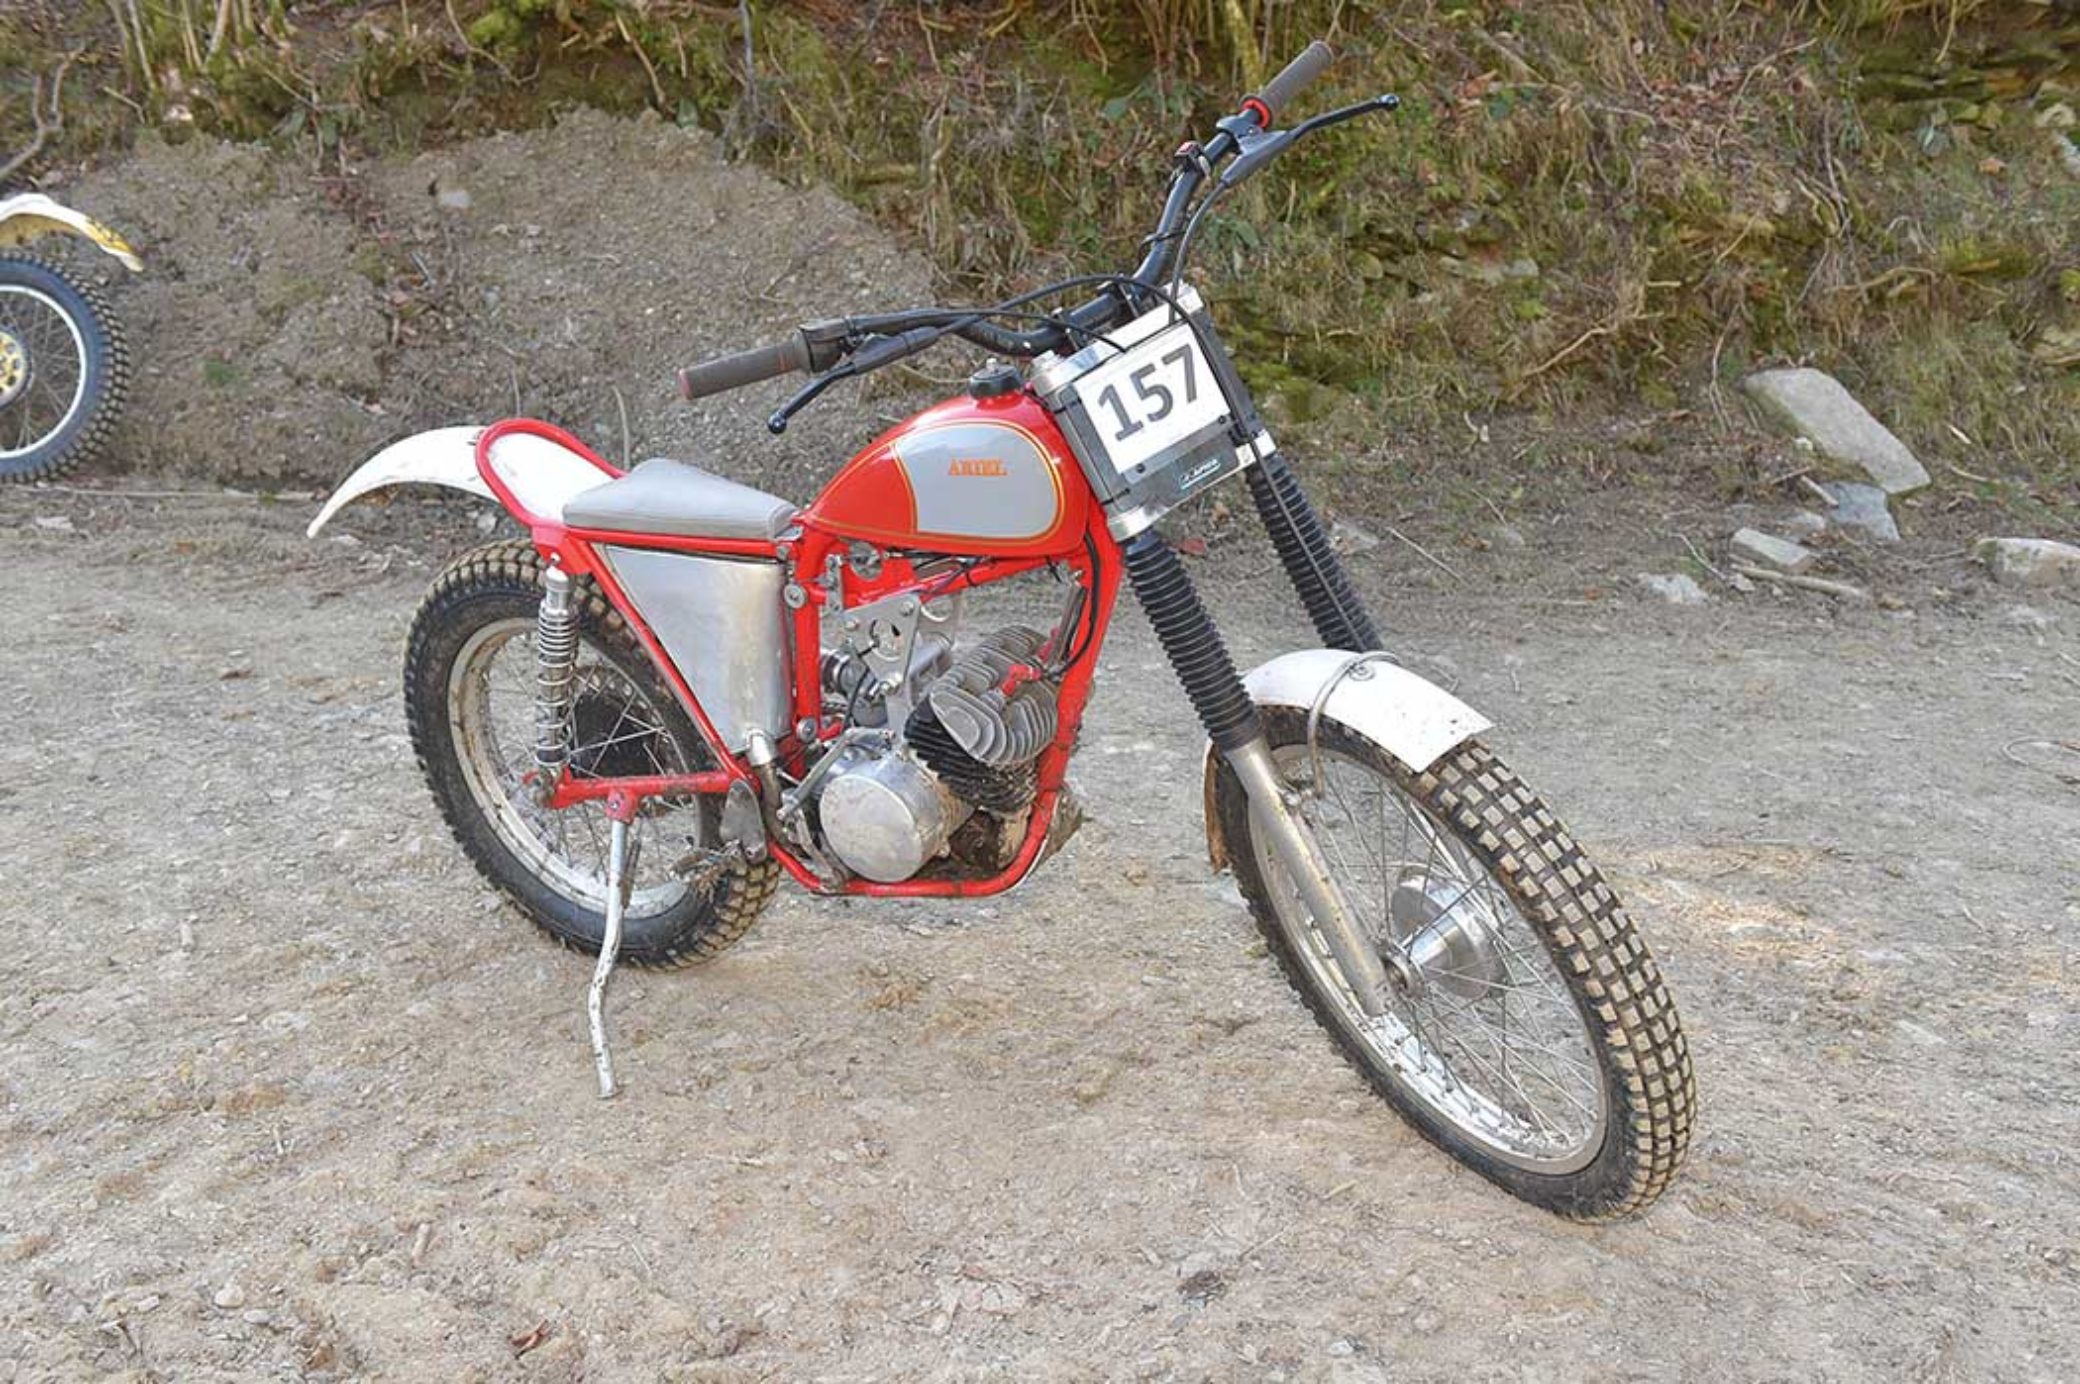 ariel trials bike for sale